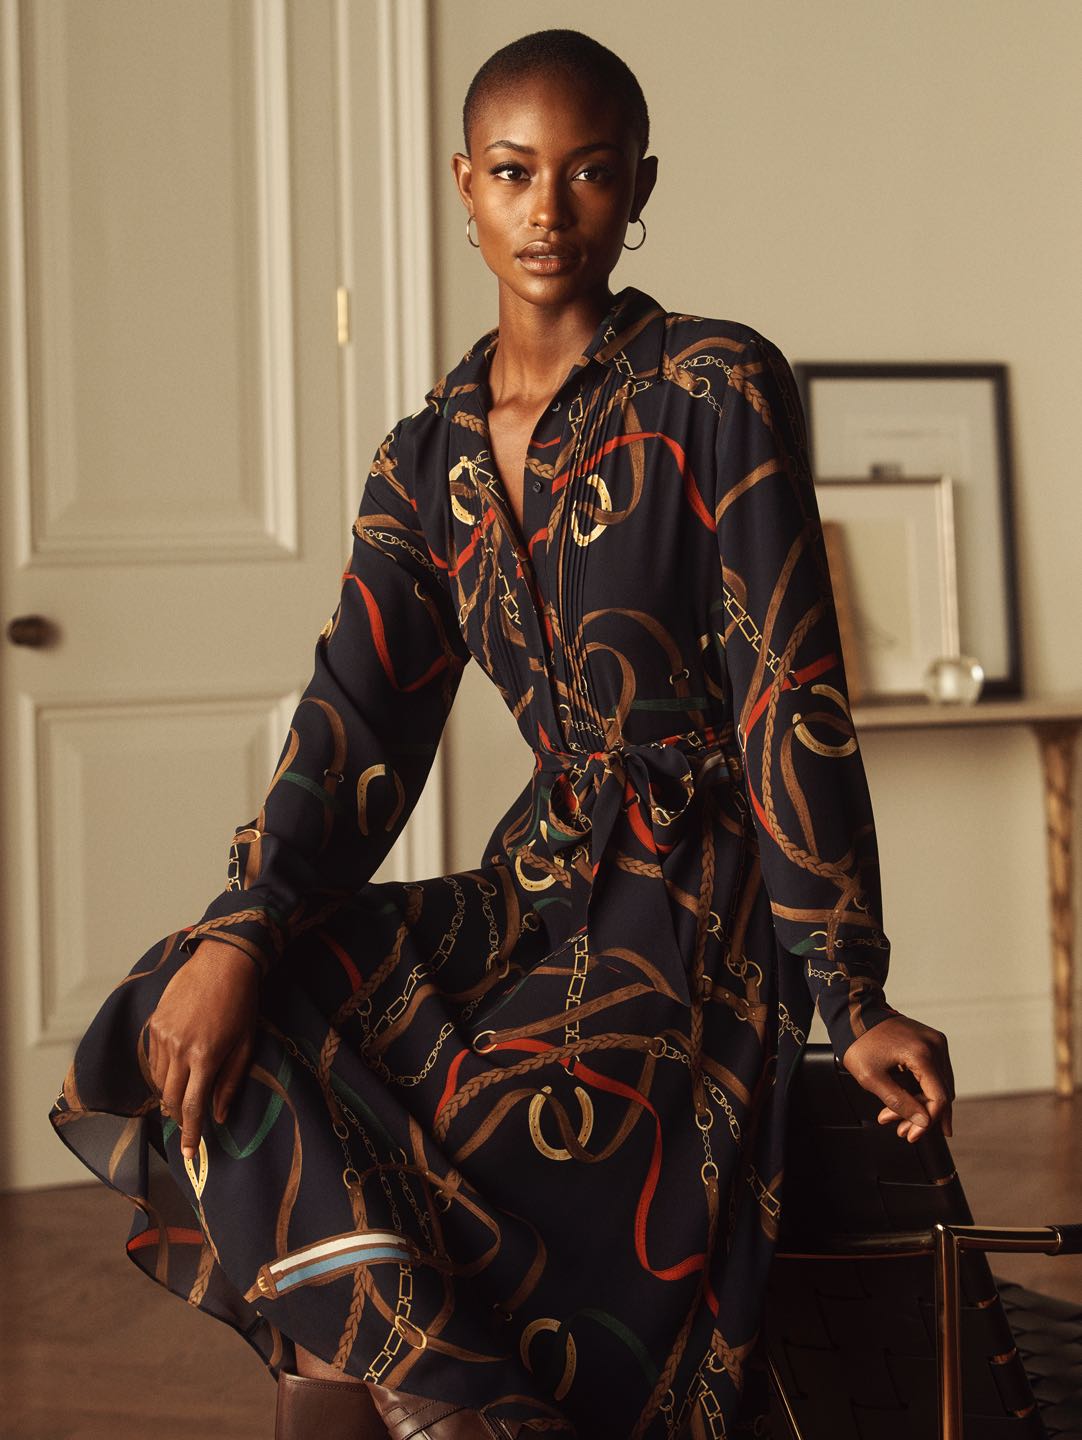 Women's Polo Ralph Lauren Designer Pajamas & Robes